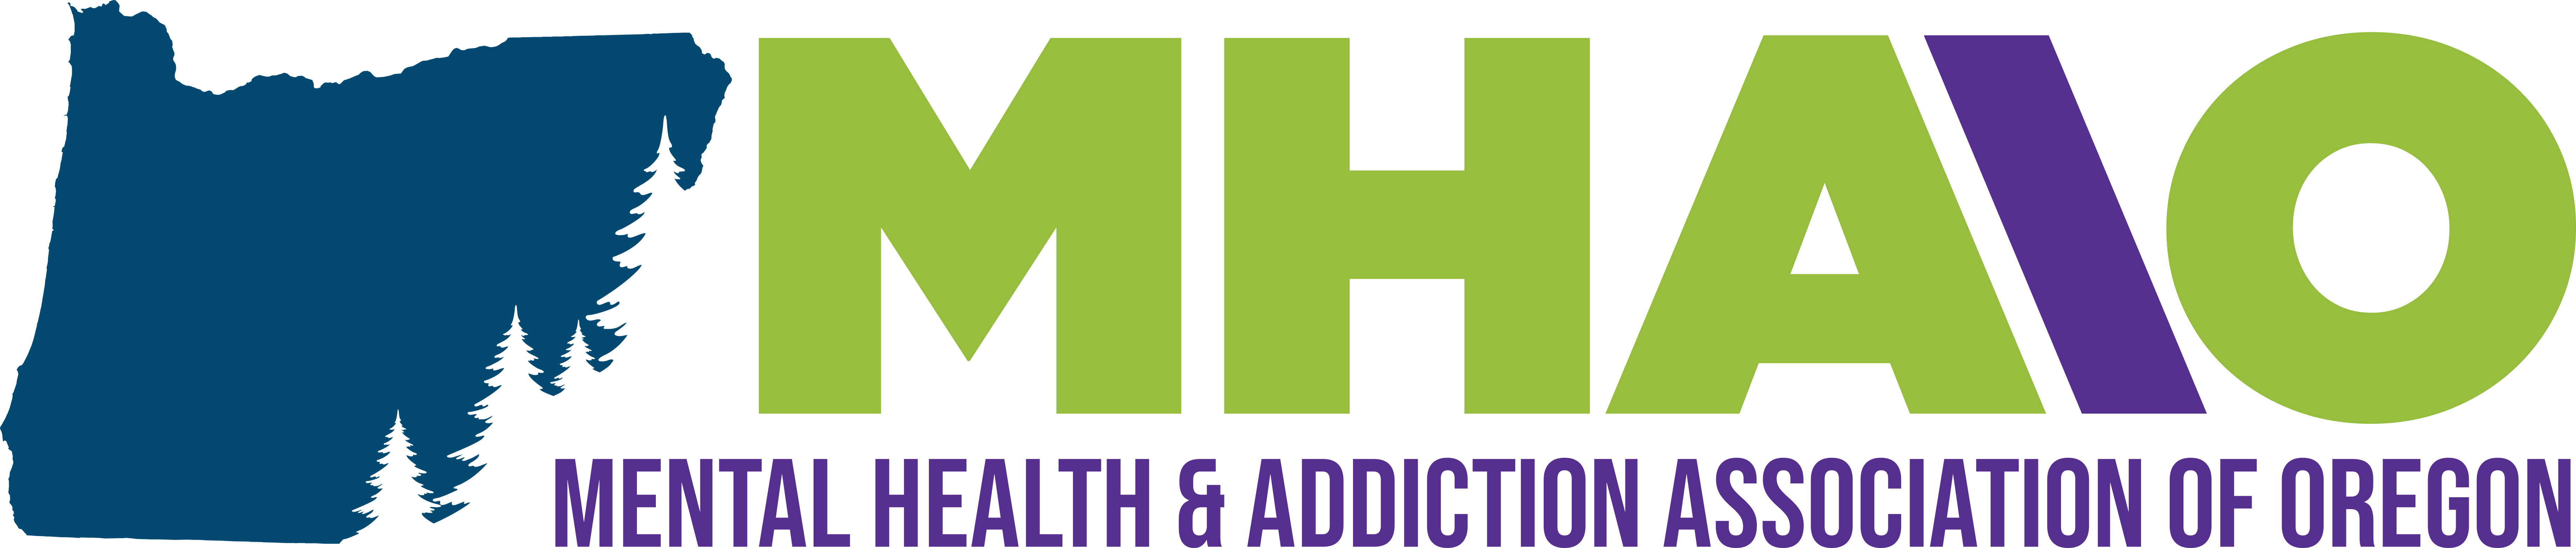 Mental Health & Addiction Association of Oregon (MHAAO)